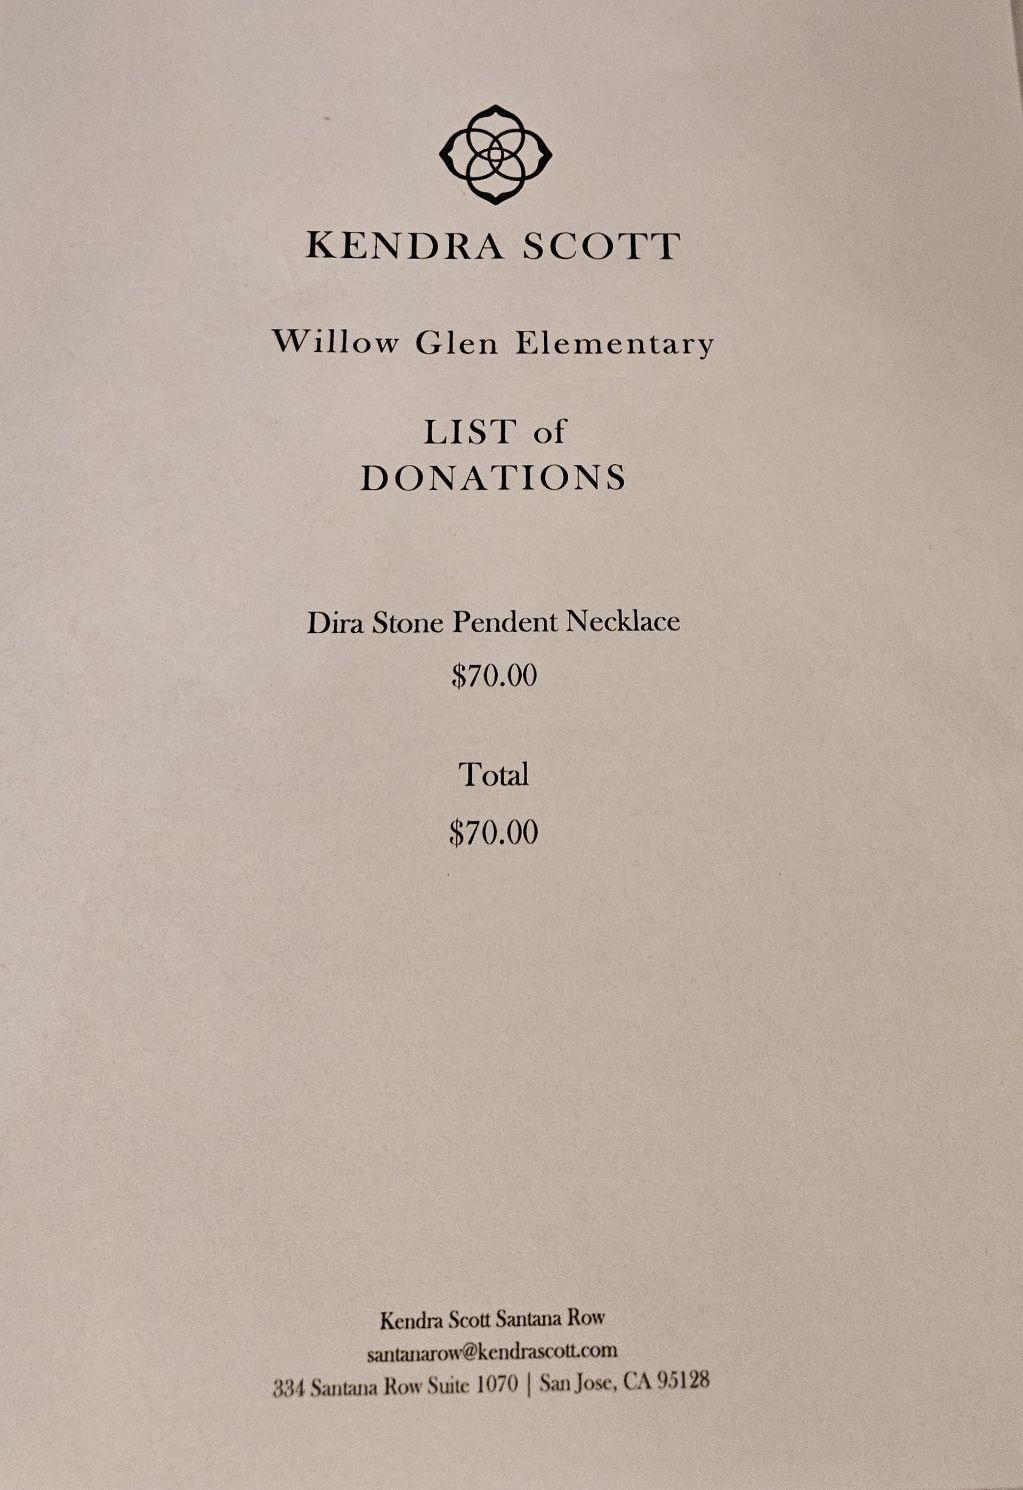 Kendra Scott - Necklace and Earrings from Kendra Scott